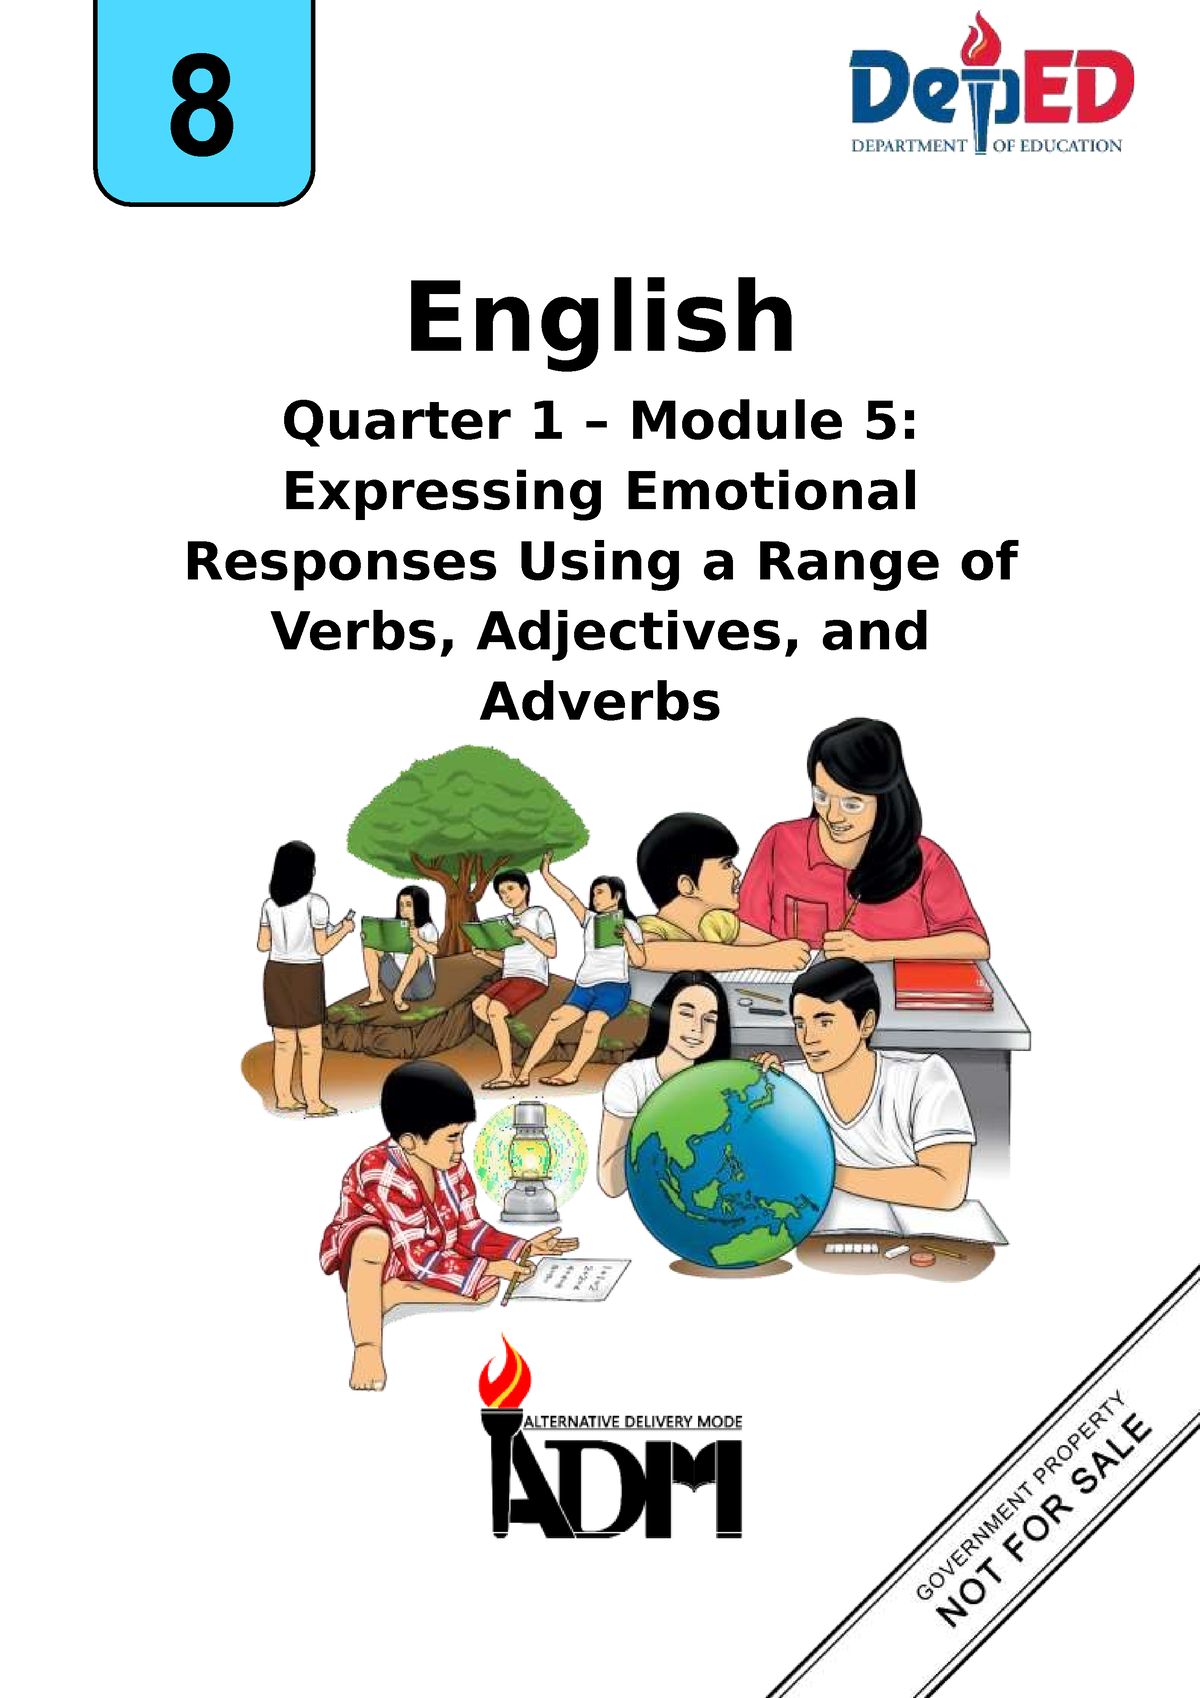 English 8 Q1 Mod5 Expressing Emotional Responses Final 07282020 8 English Quarter 1 Module 5 7338